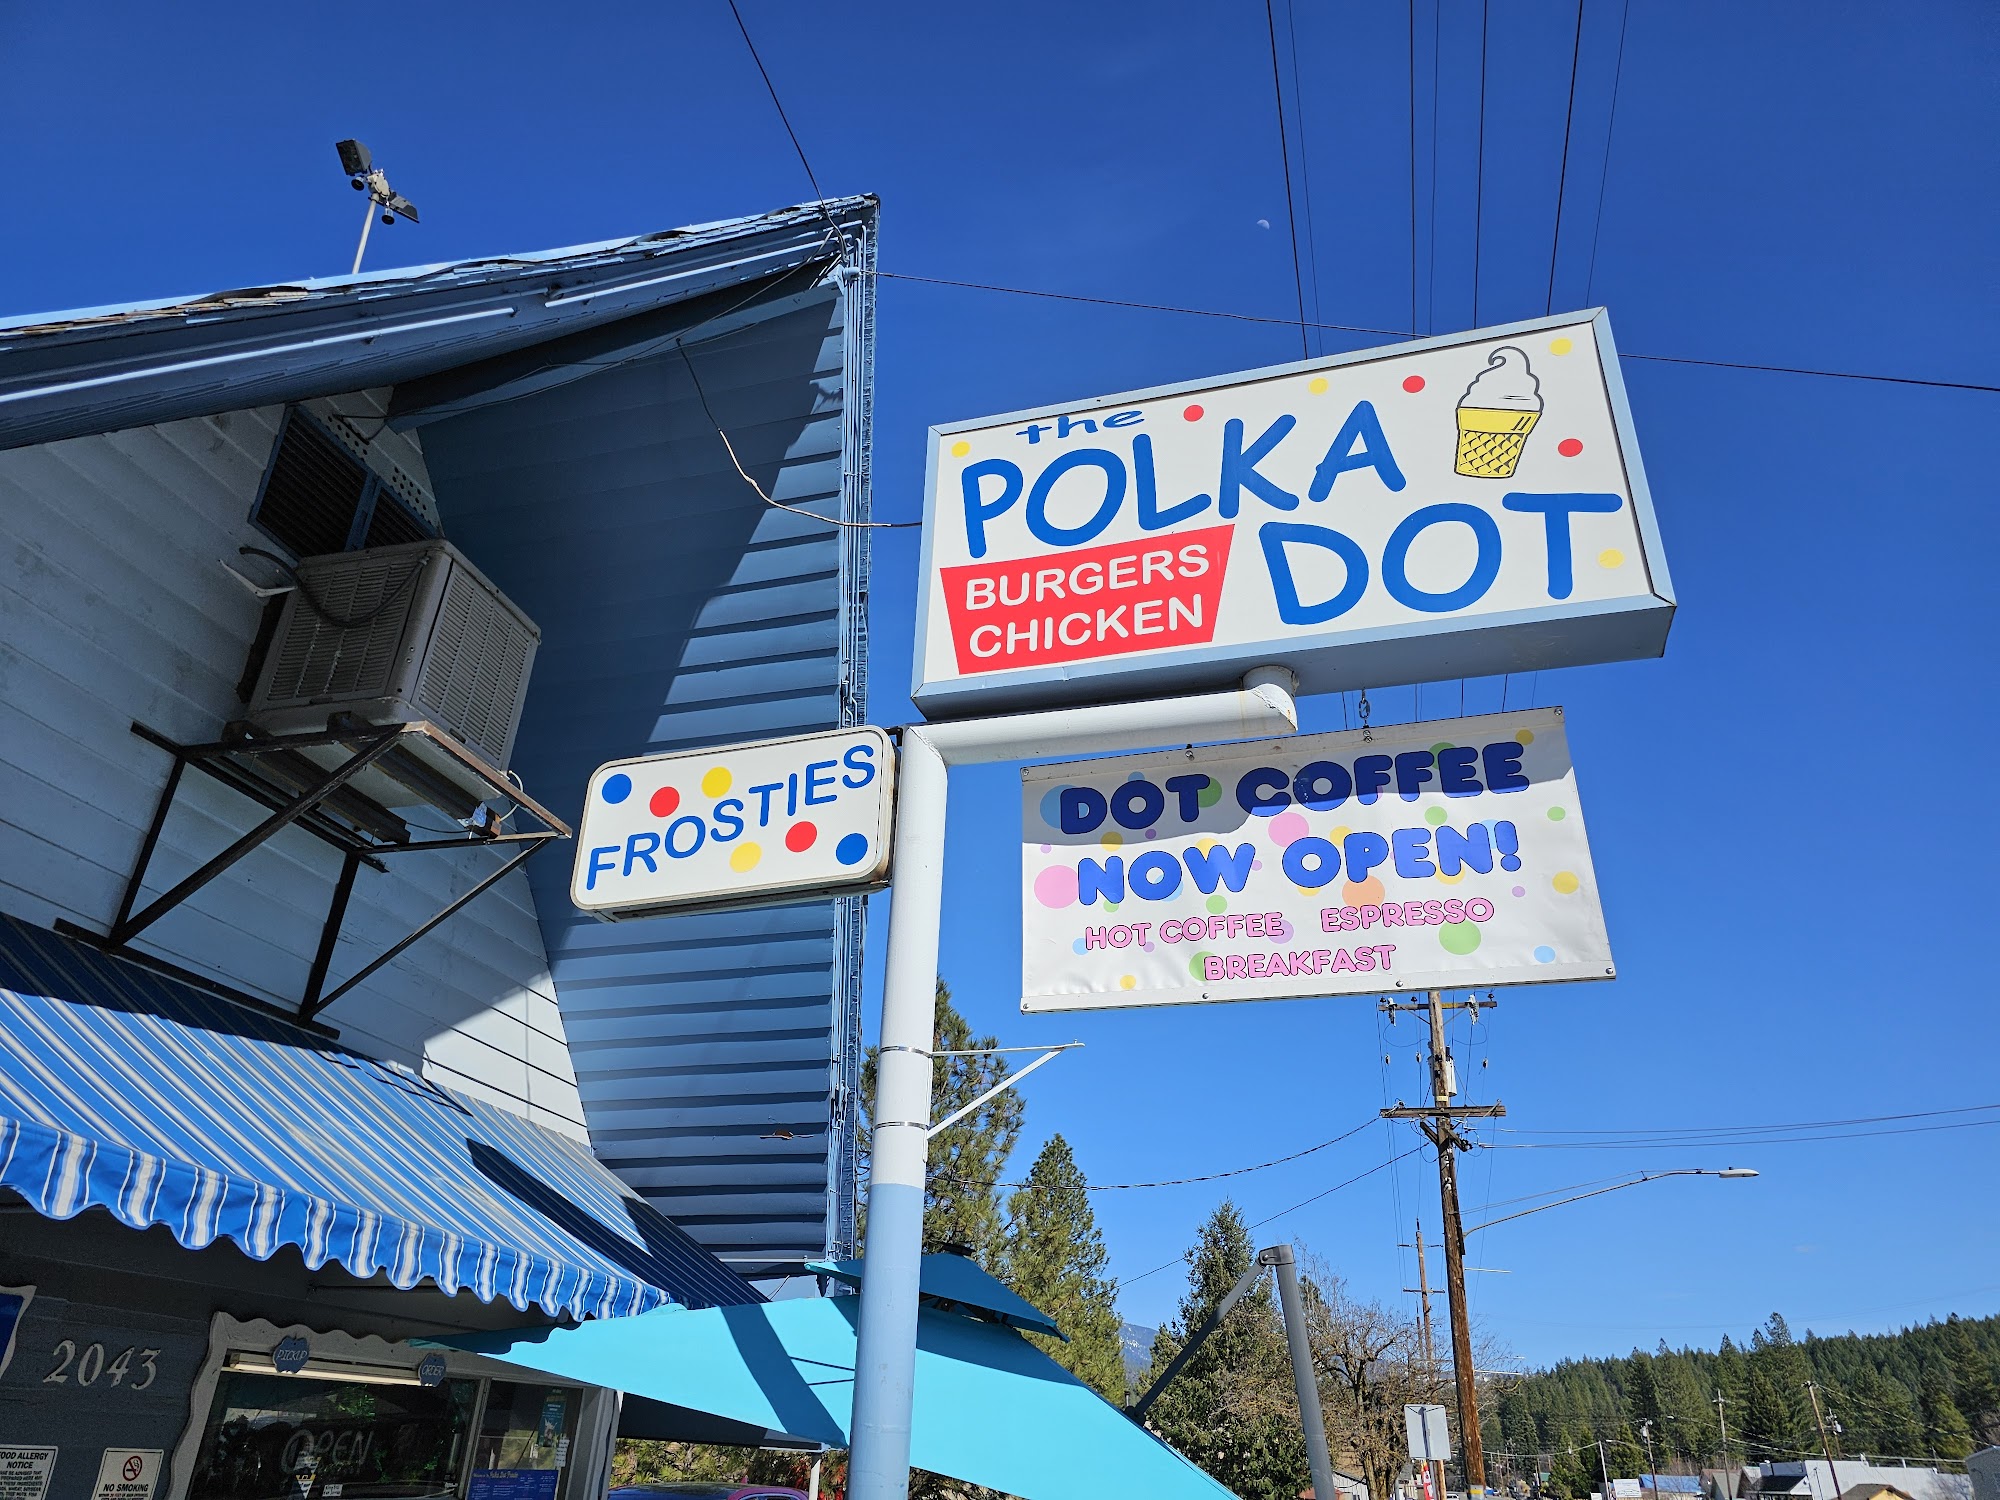 The Polka Dot